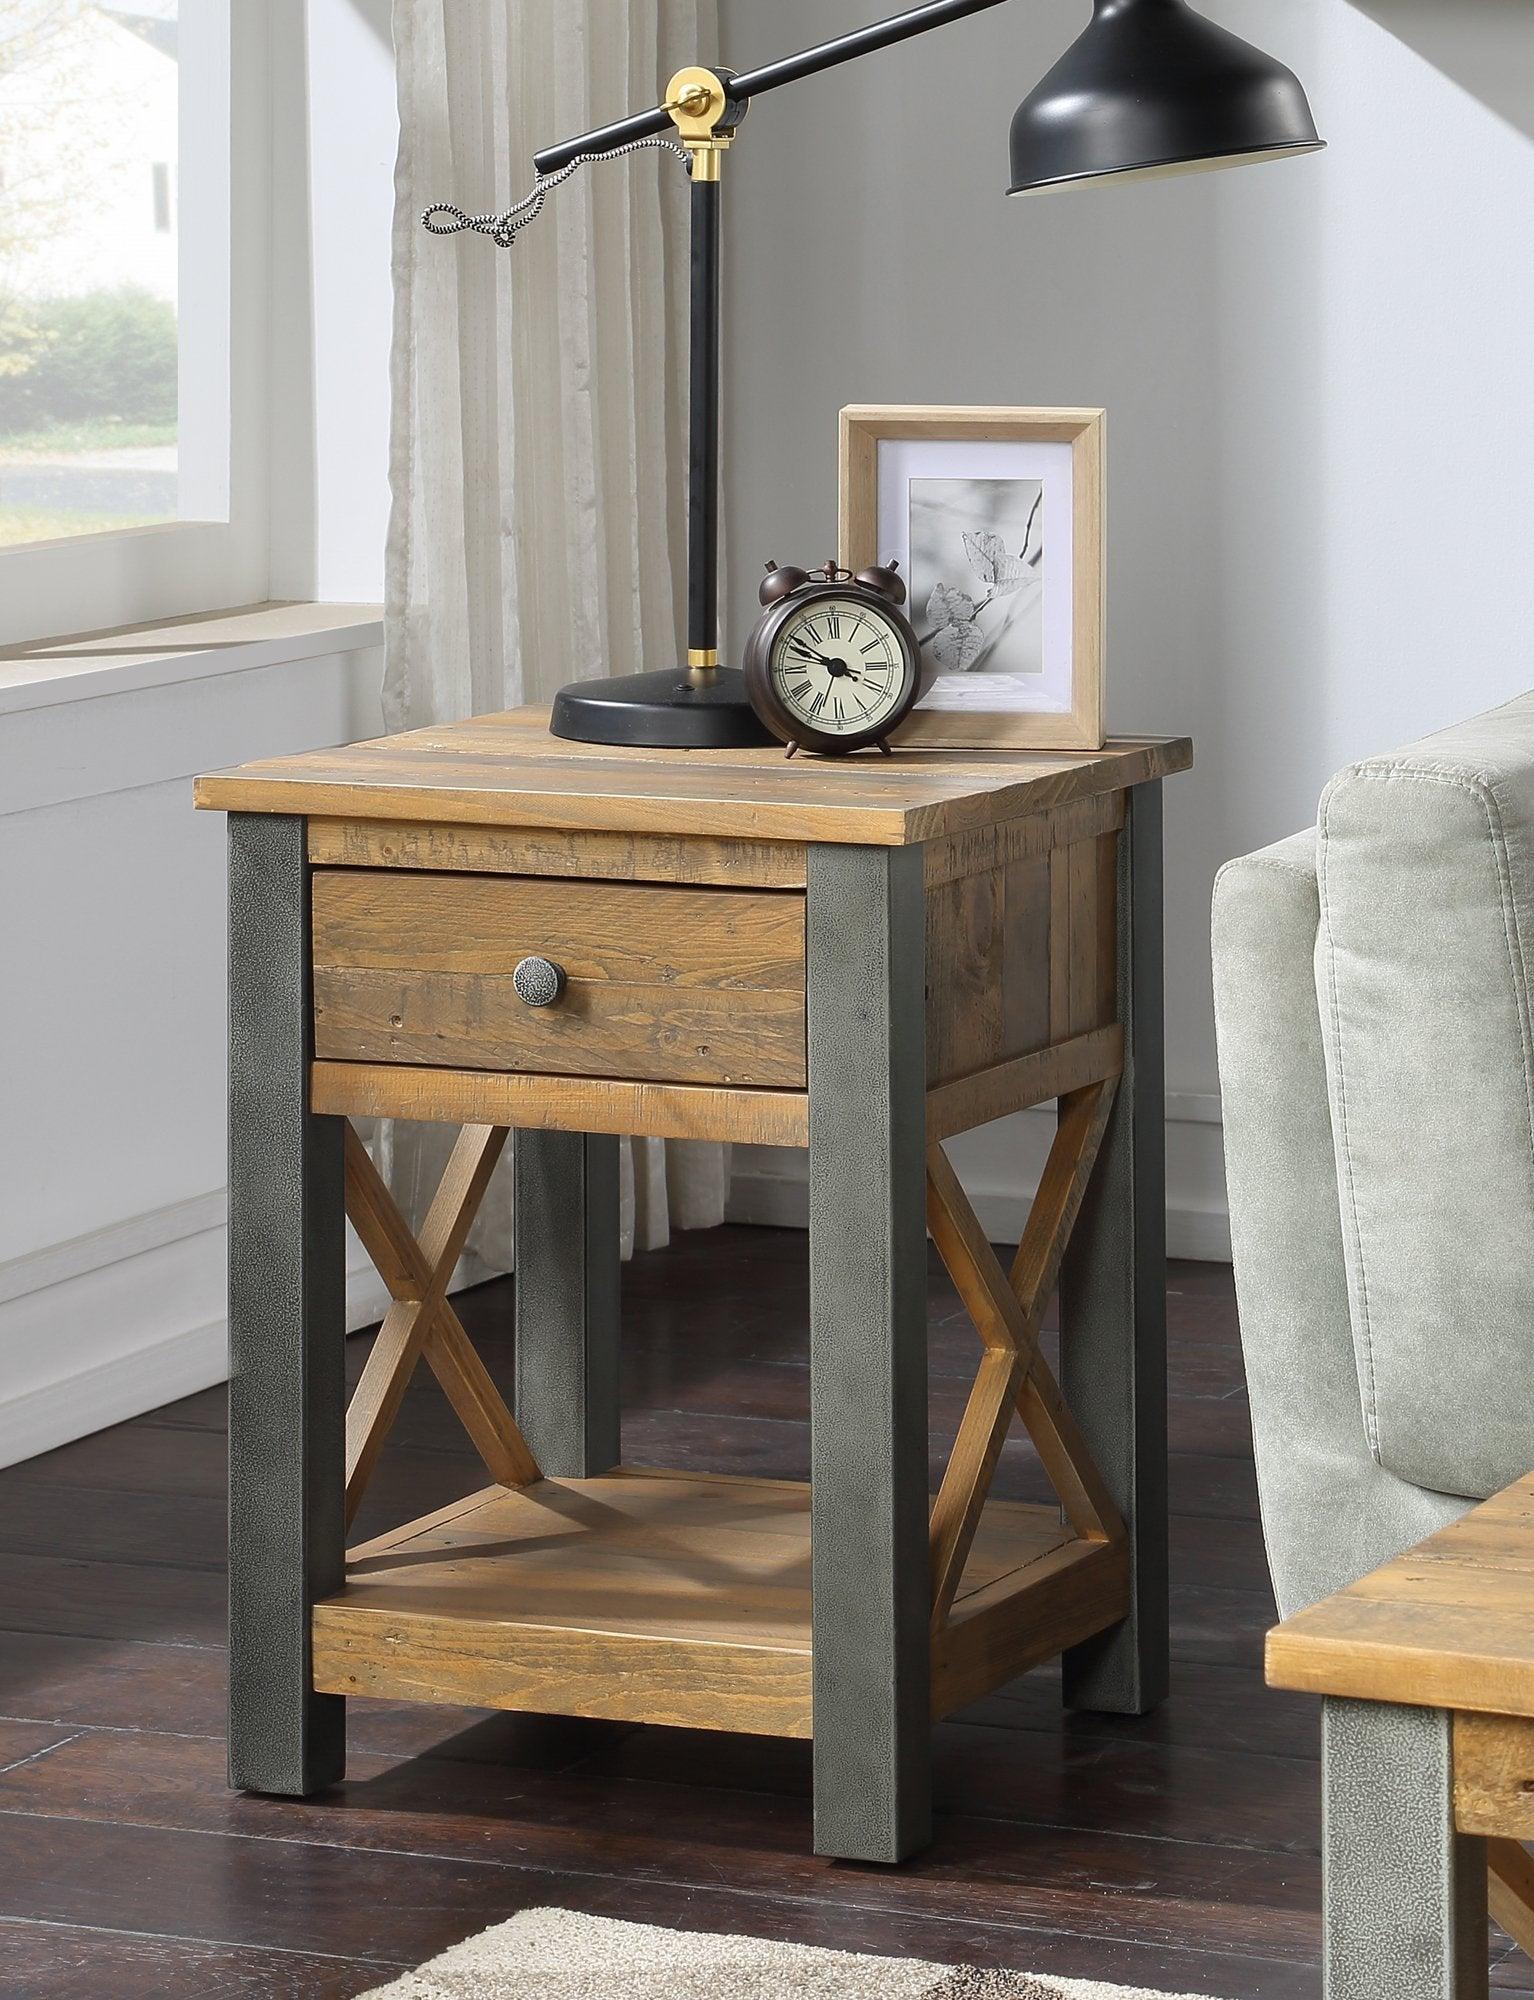 Urban elegance - reclaimed lamp table with drawer - crimblefest furniture - image 1